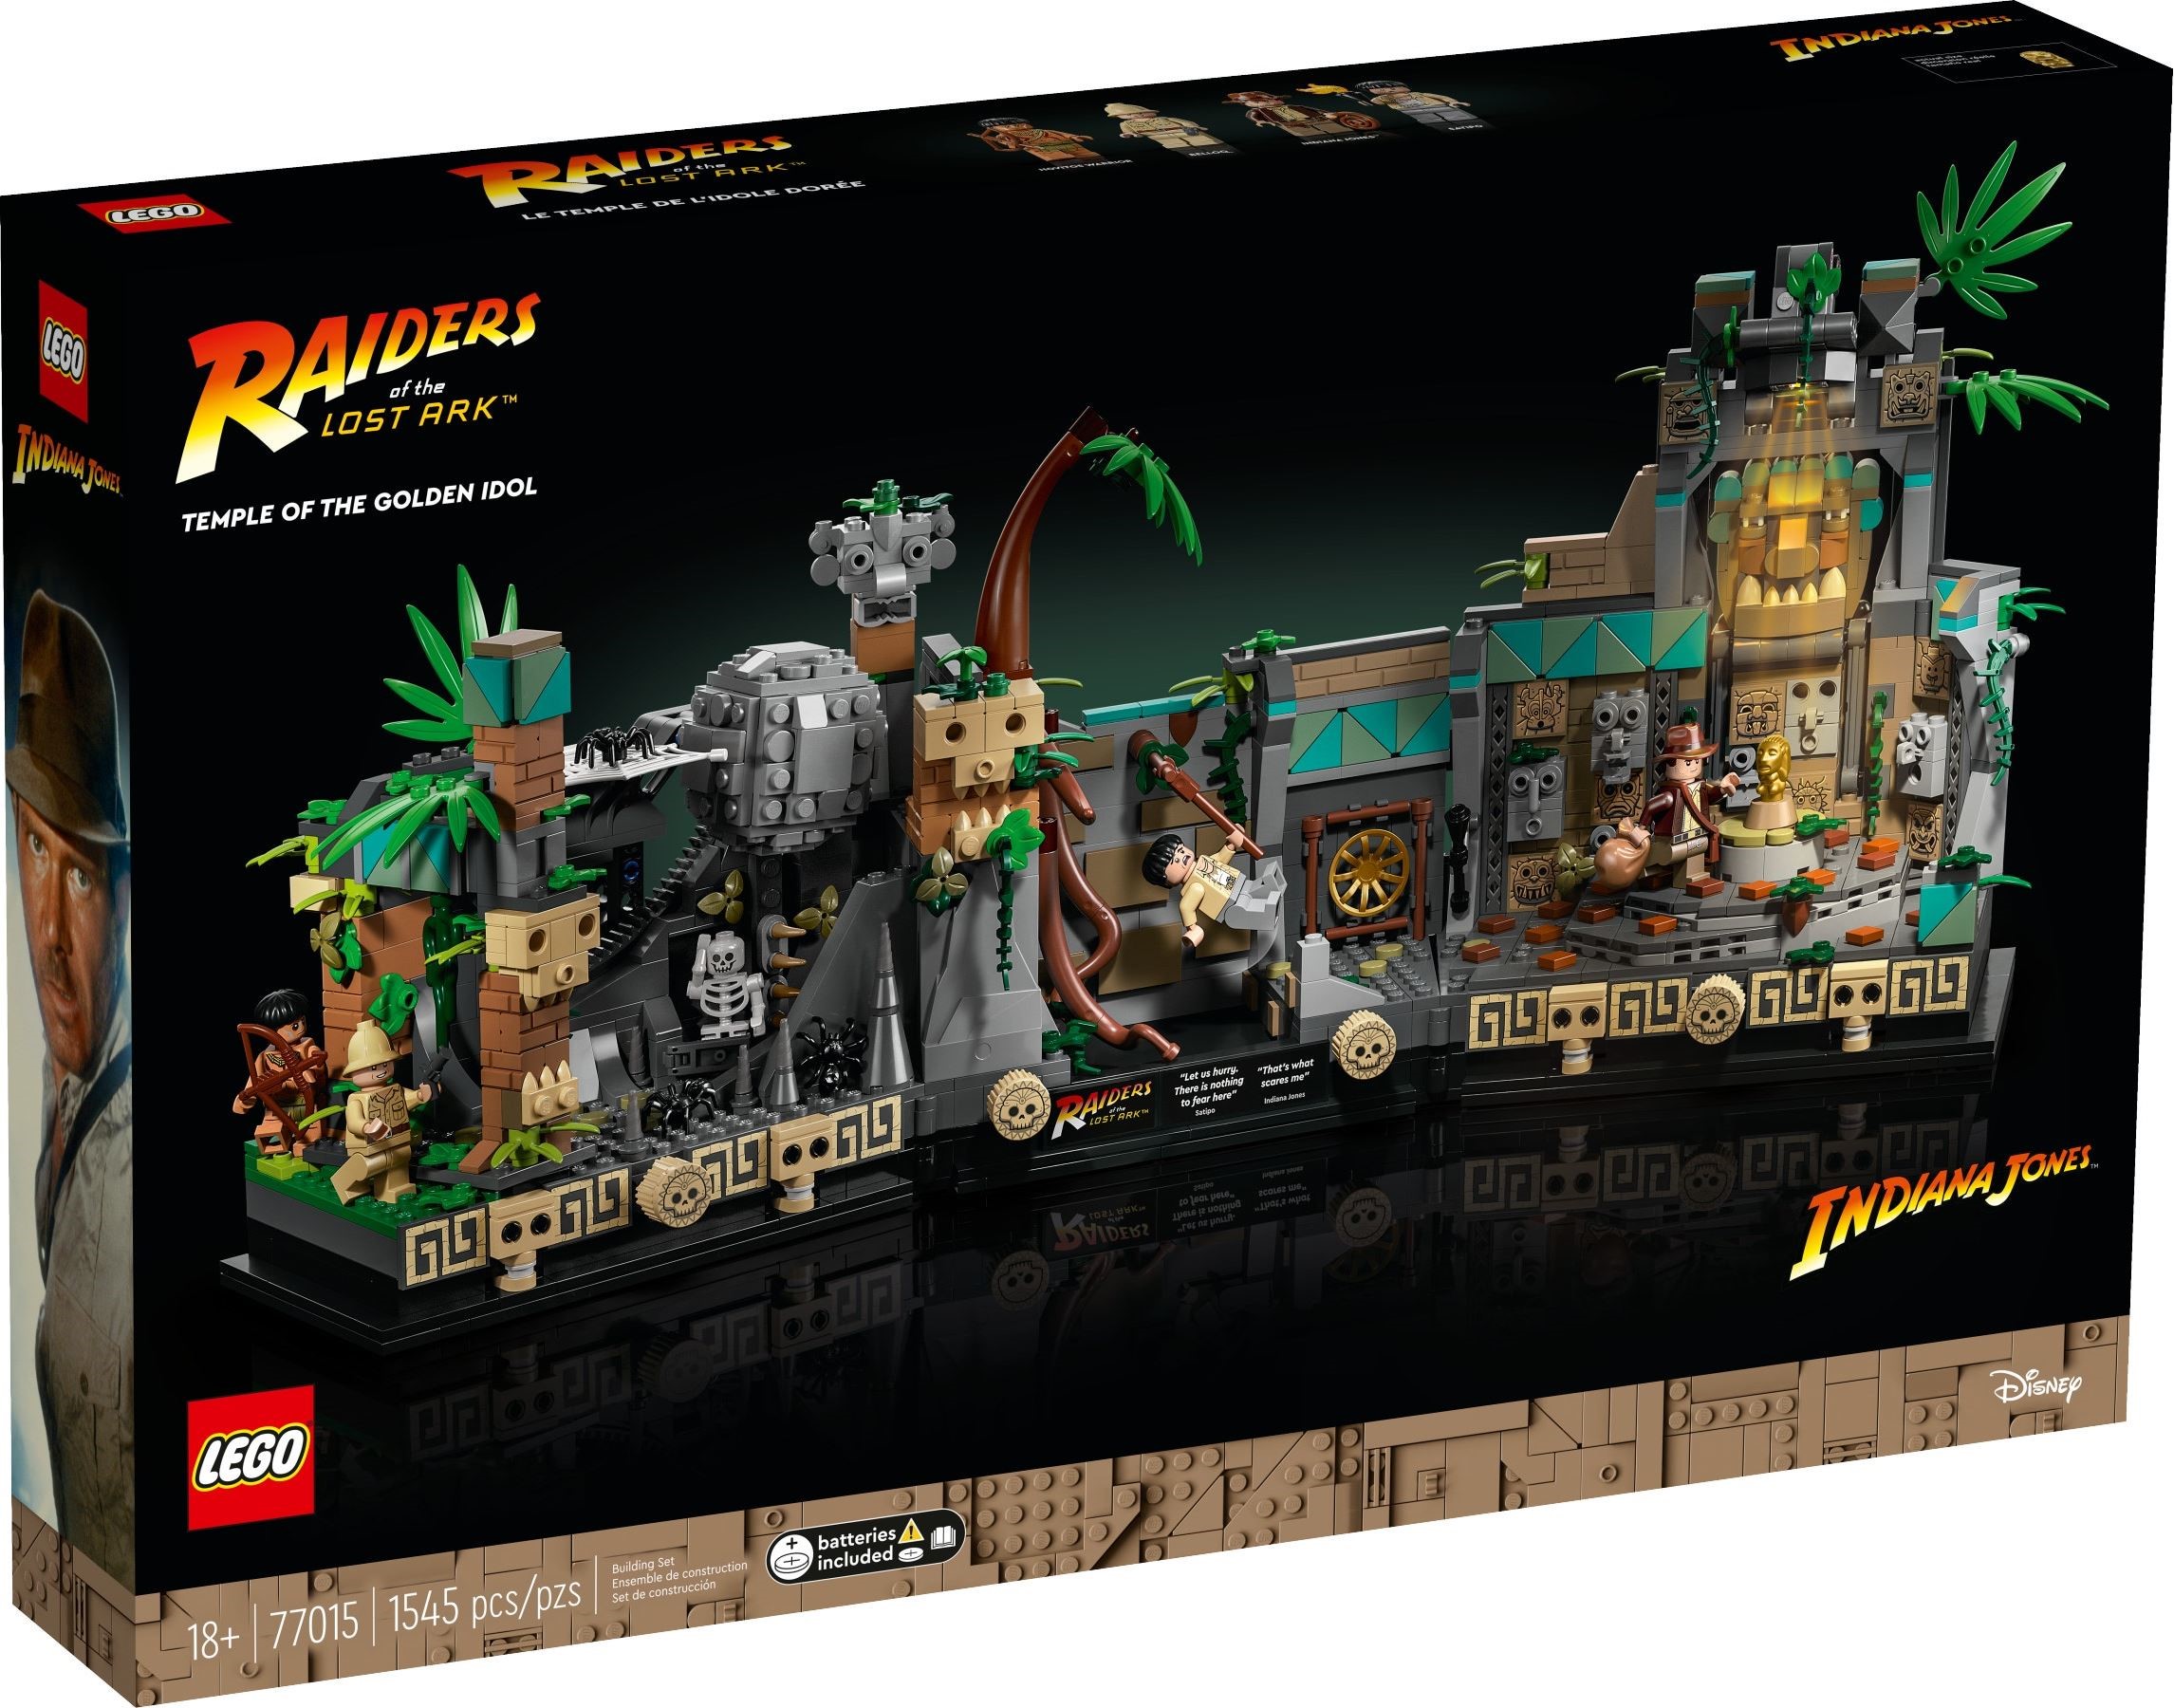 LEGO-Indiana-Jones-Raiders-of-the-Lost-Ark-Temple-of-the-Golden-Idol-Set-77015.jpg